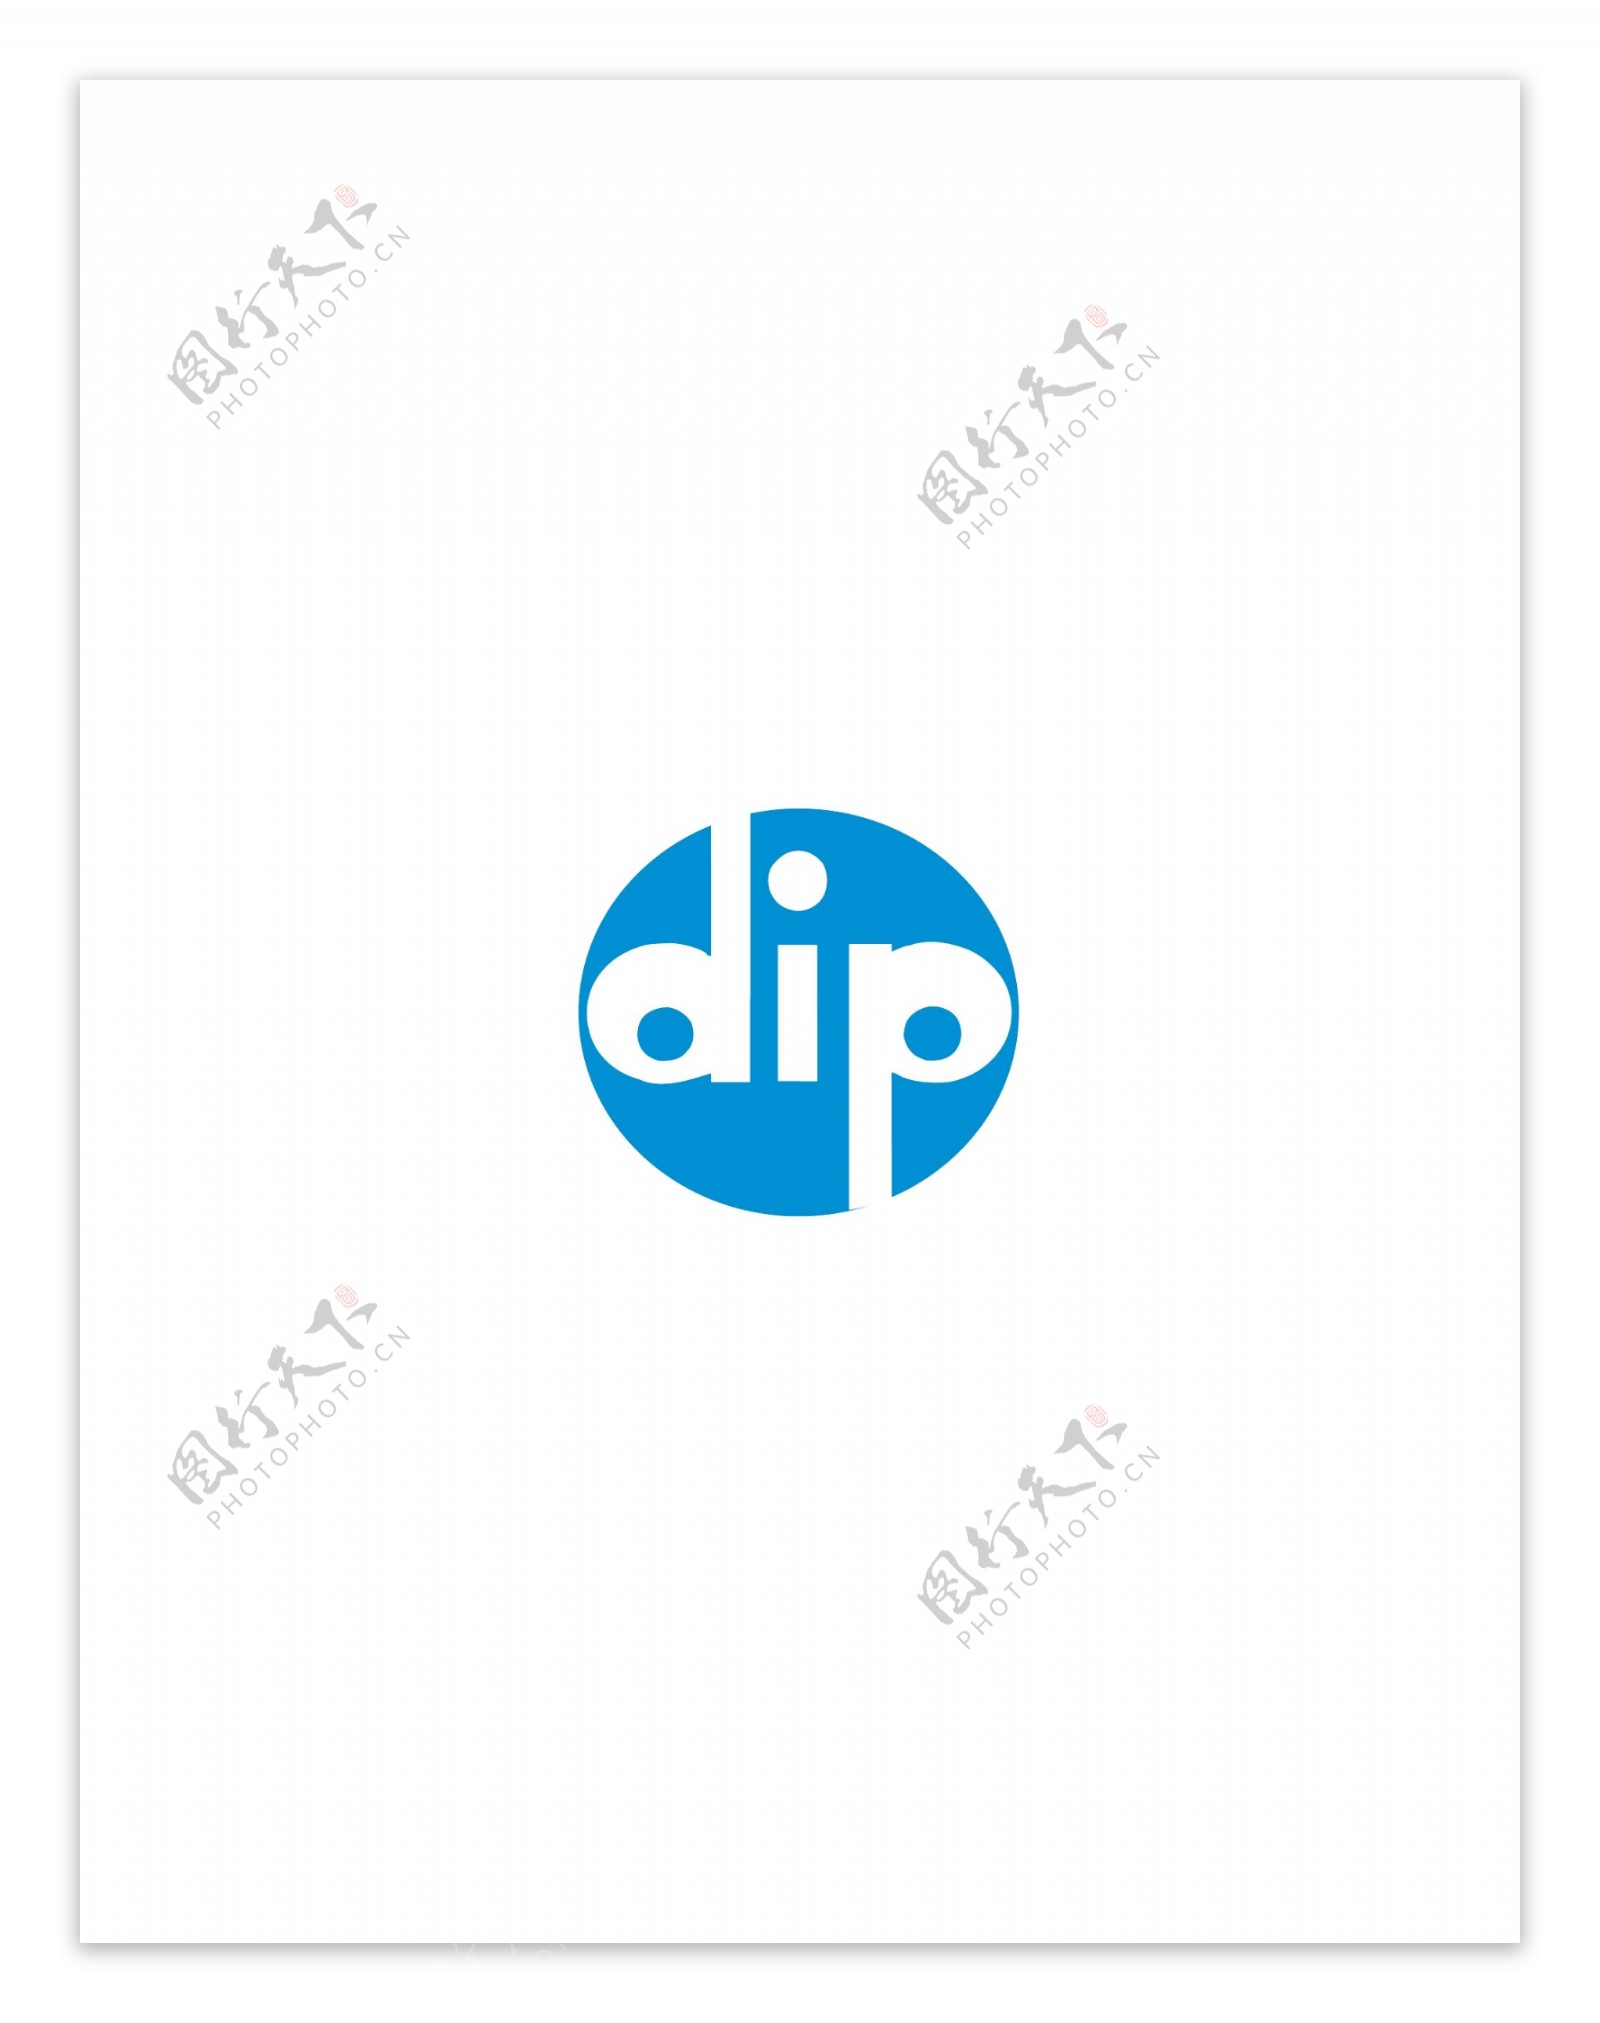 Diplogo设计欣赏Dip下载标志设计欣赏